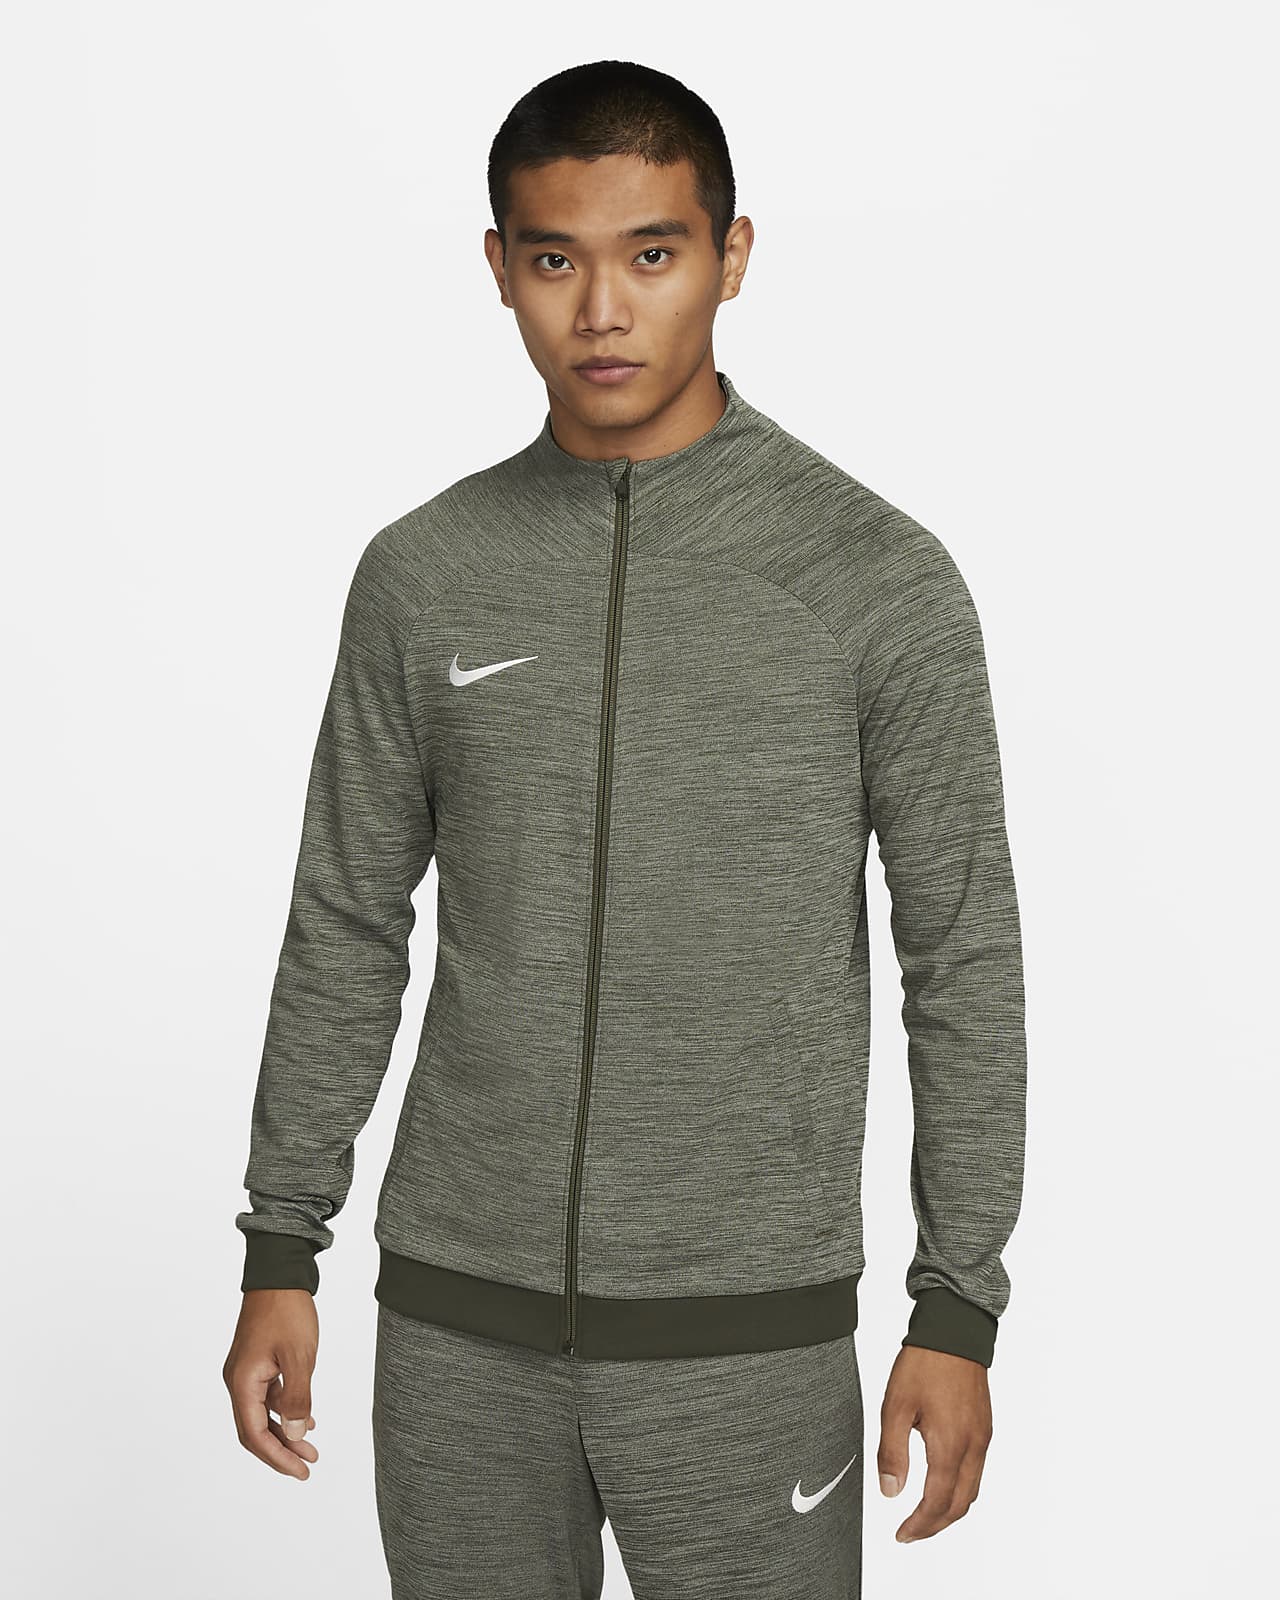 Nike Academy Men's Soccer Track Jacket.